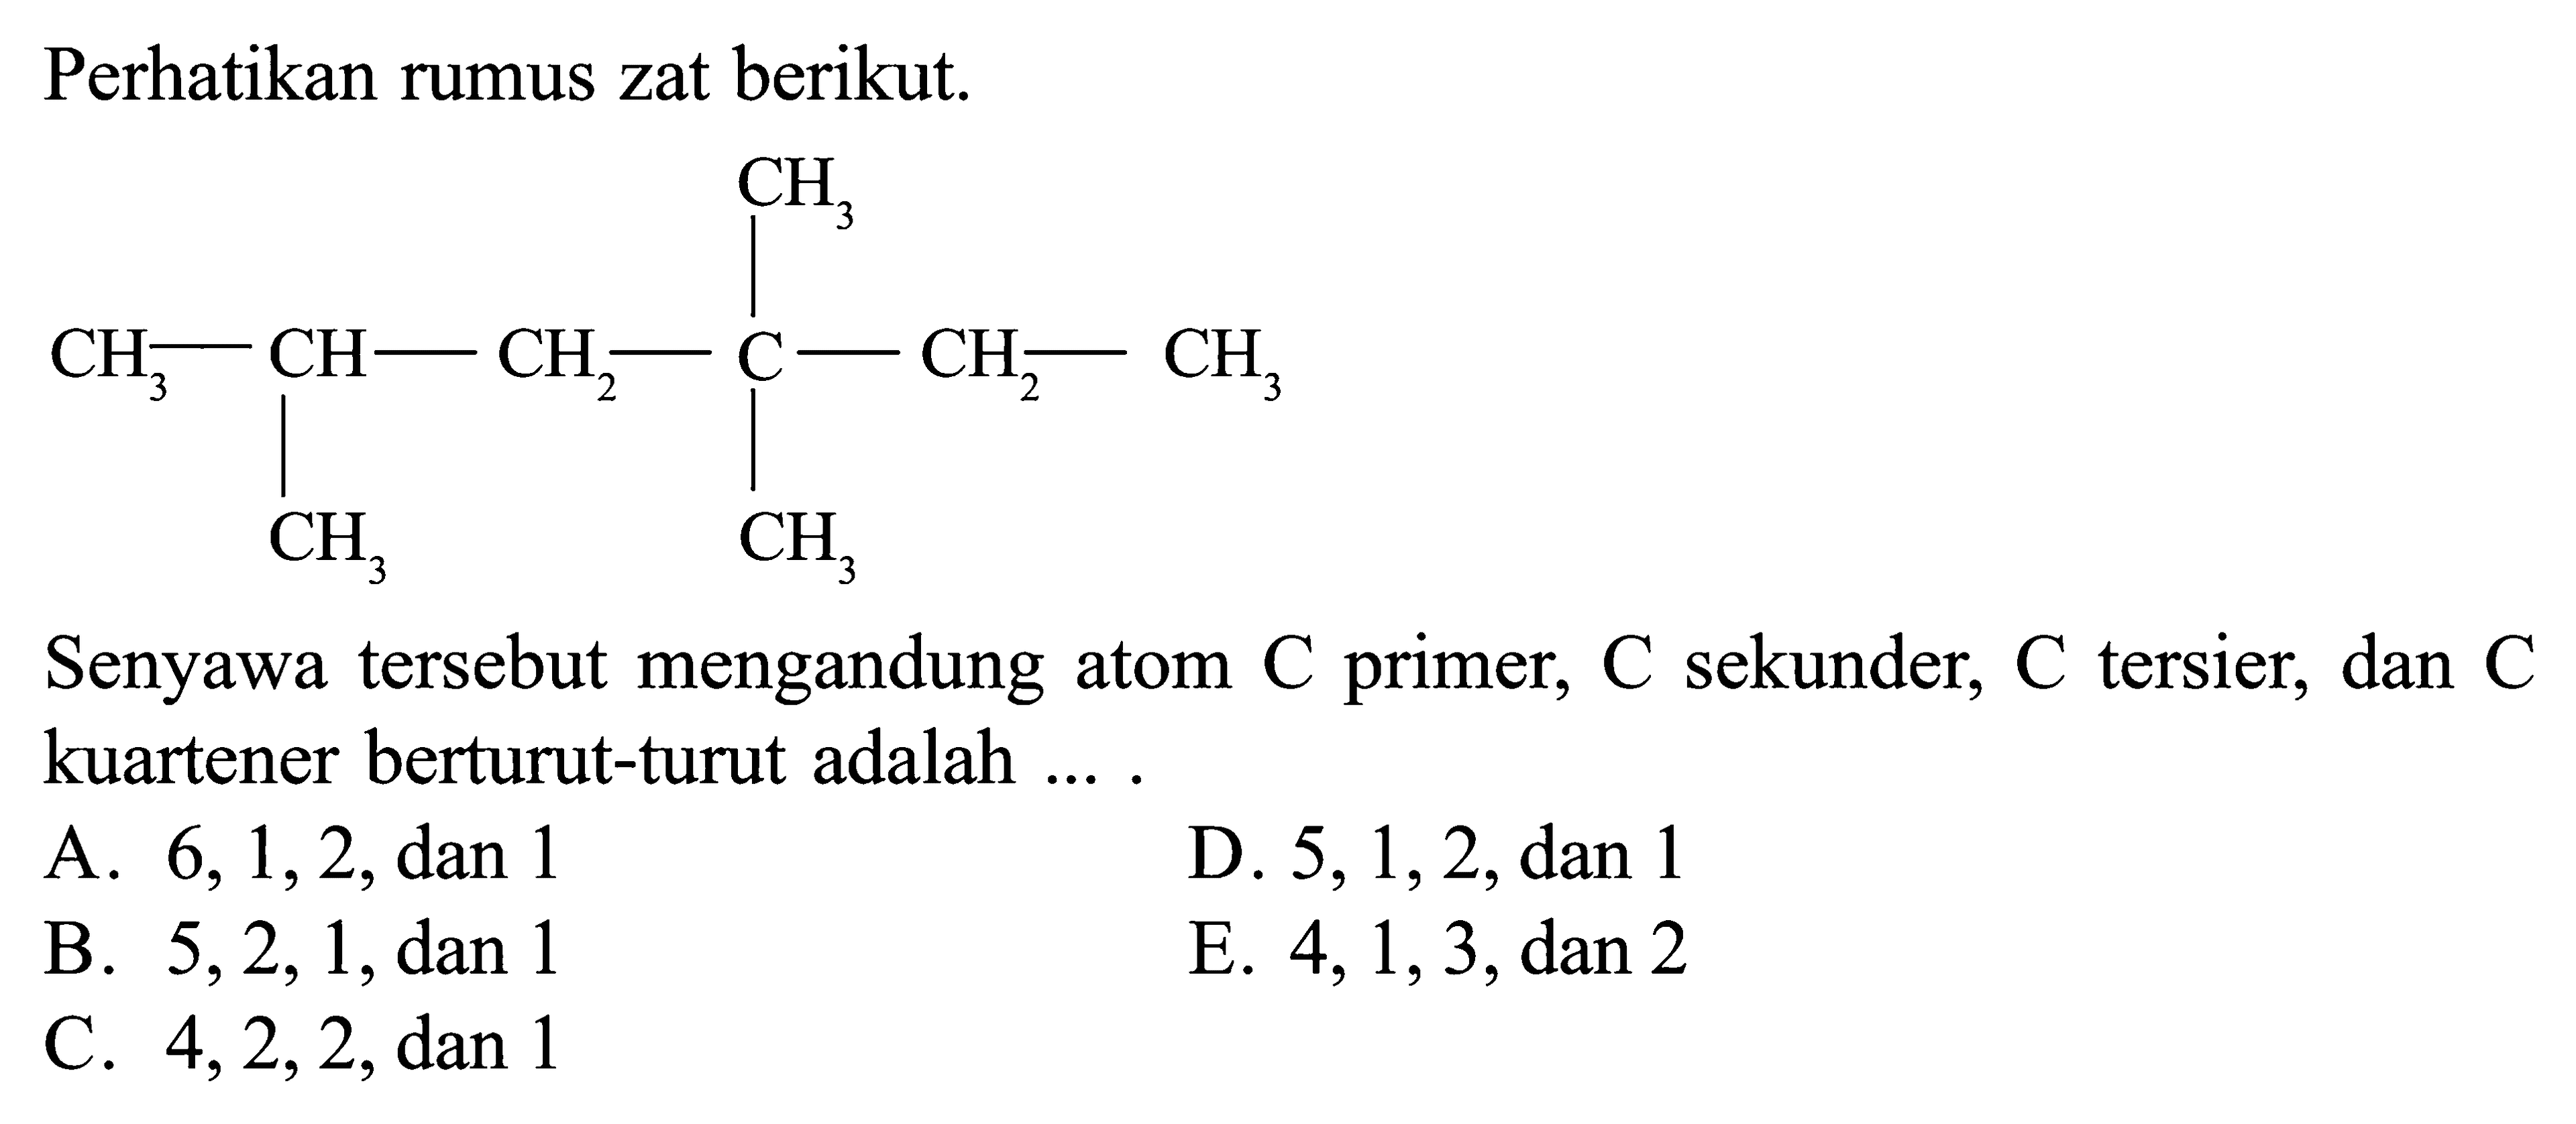 Perhatikan rumus zat berikut. CH3 CH3 - CH - CH2 - C - CH2 - CH3 CH3 CH3 Senyawa tersebut mengandung atom C primer, C sekunder, C tersier, dan C kuartener berturut-turut adalah ....